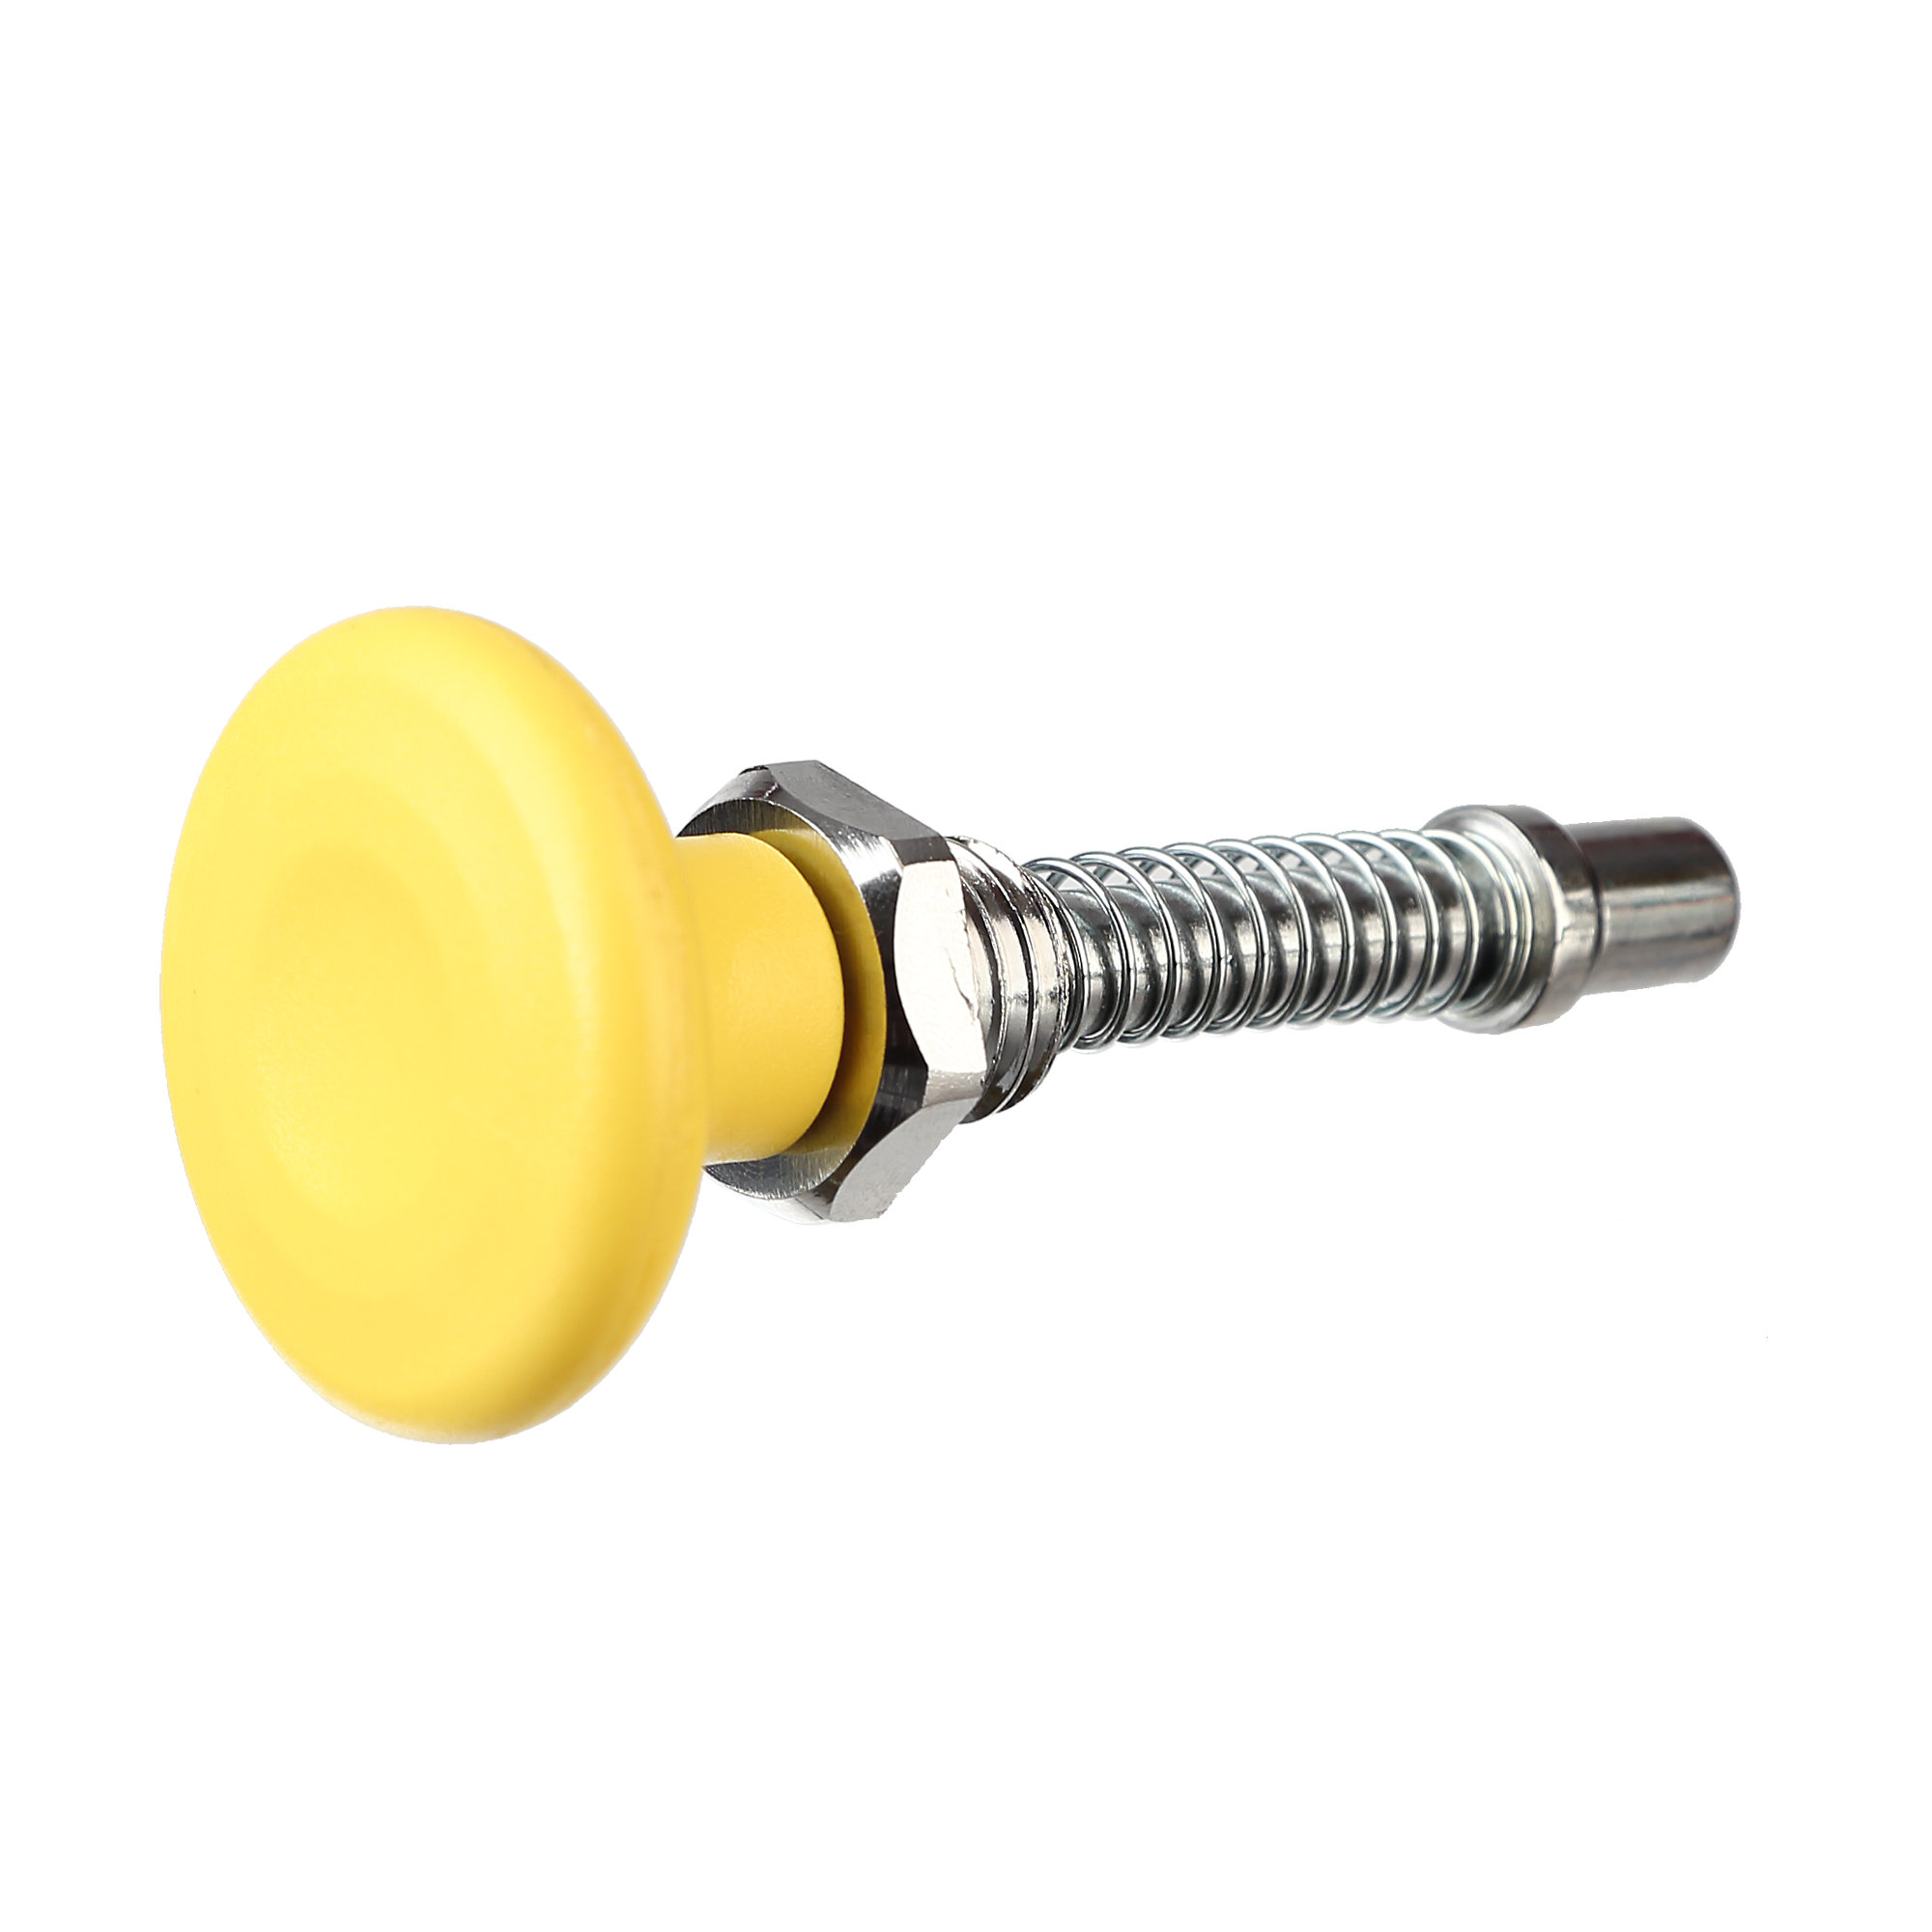 Adjust Pin Assembly, Yellow Knob